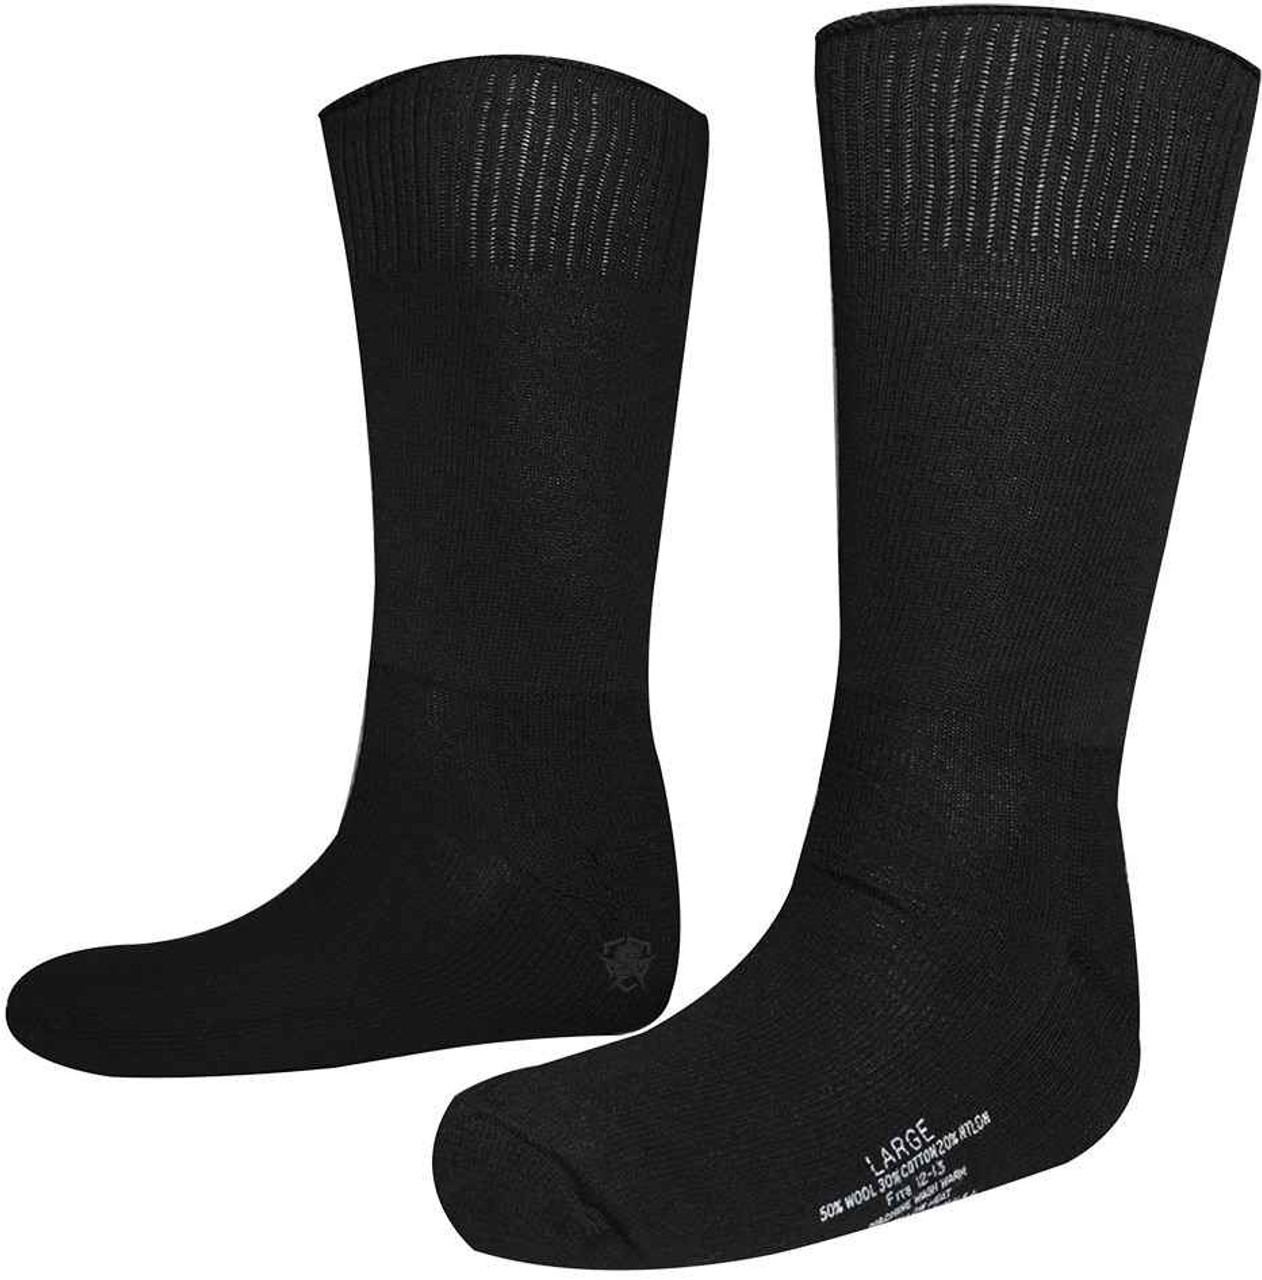 5ive Star Gear Cushion Sole Socks